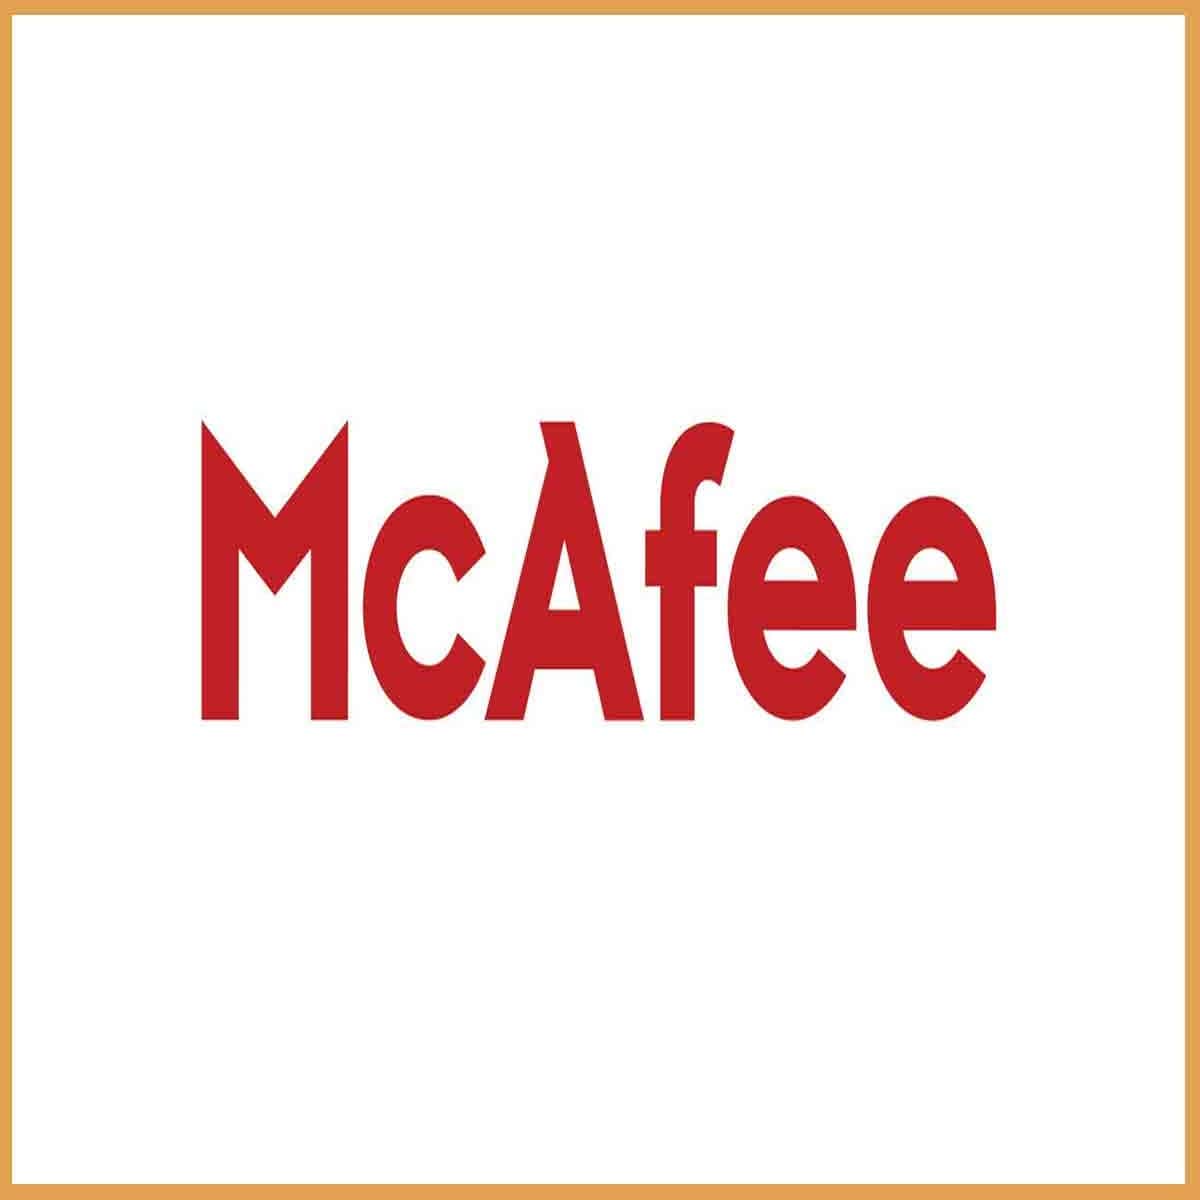 mcafee antivirus license key